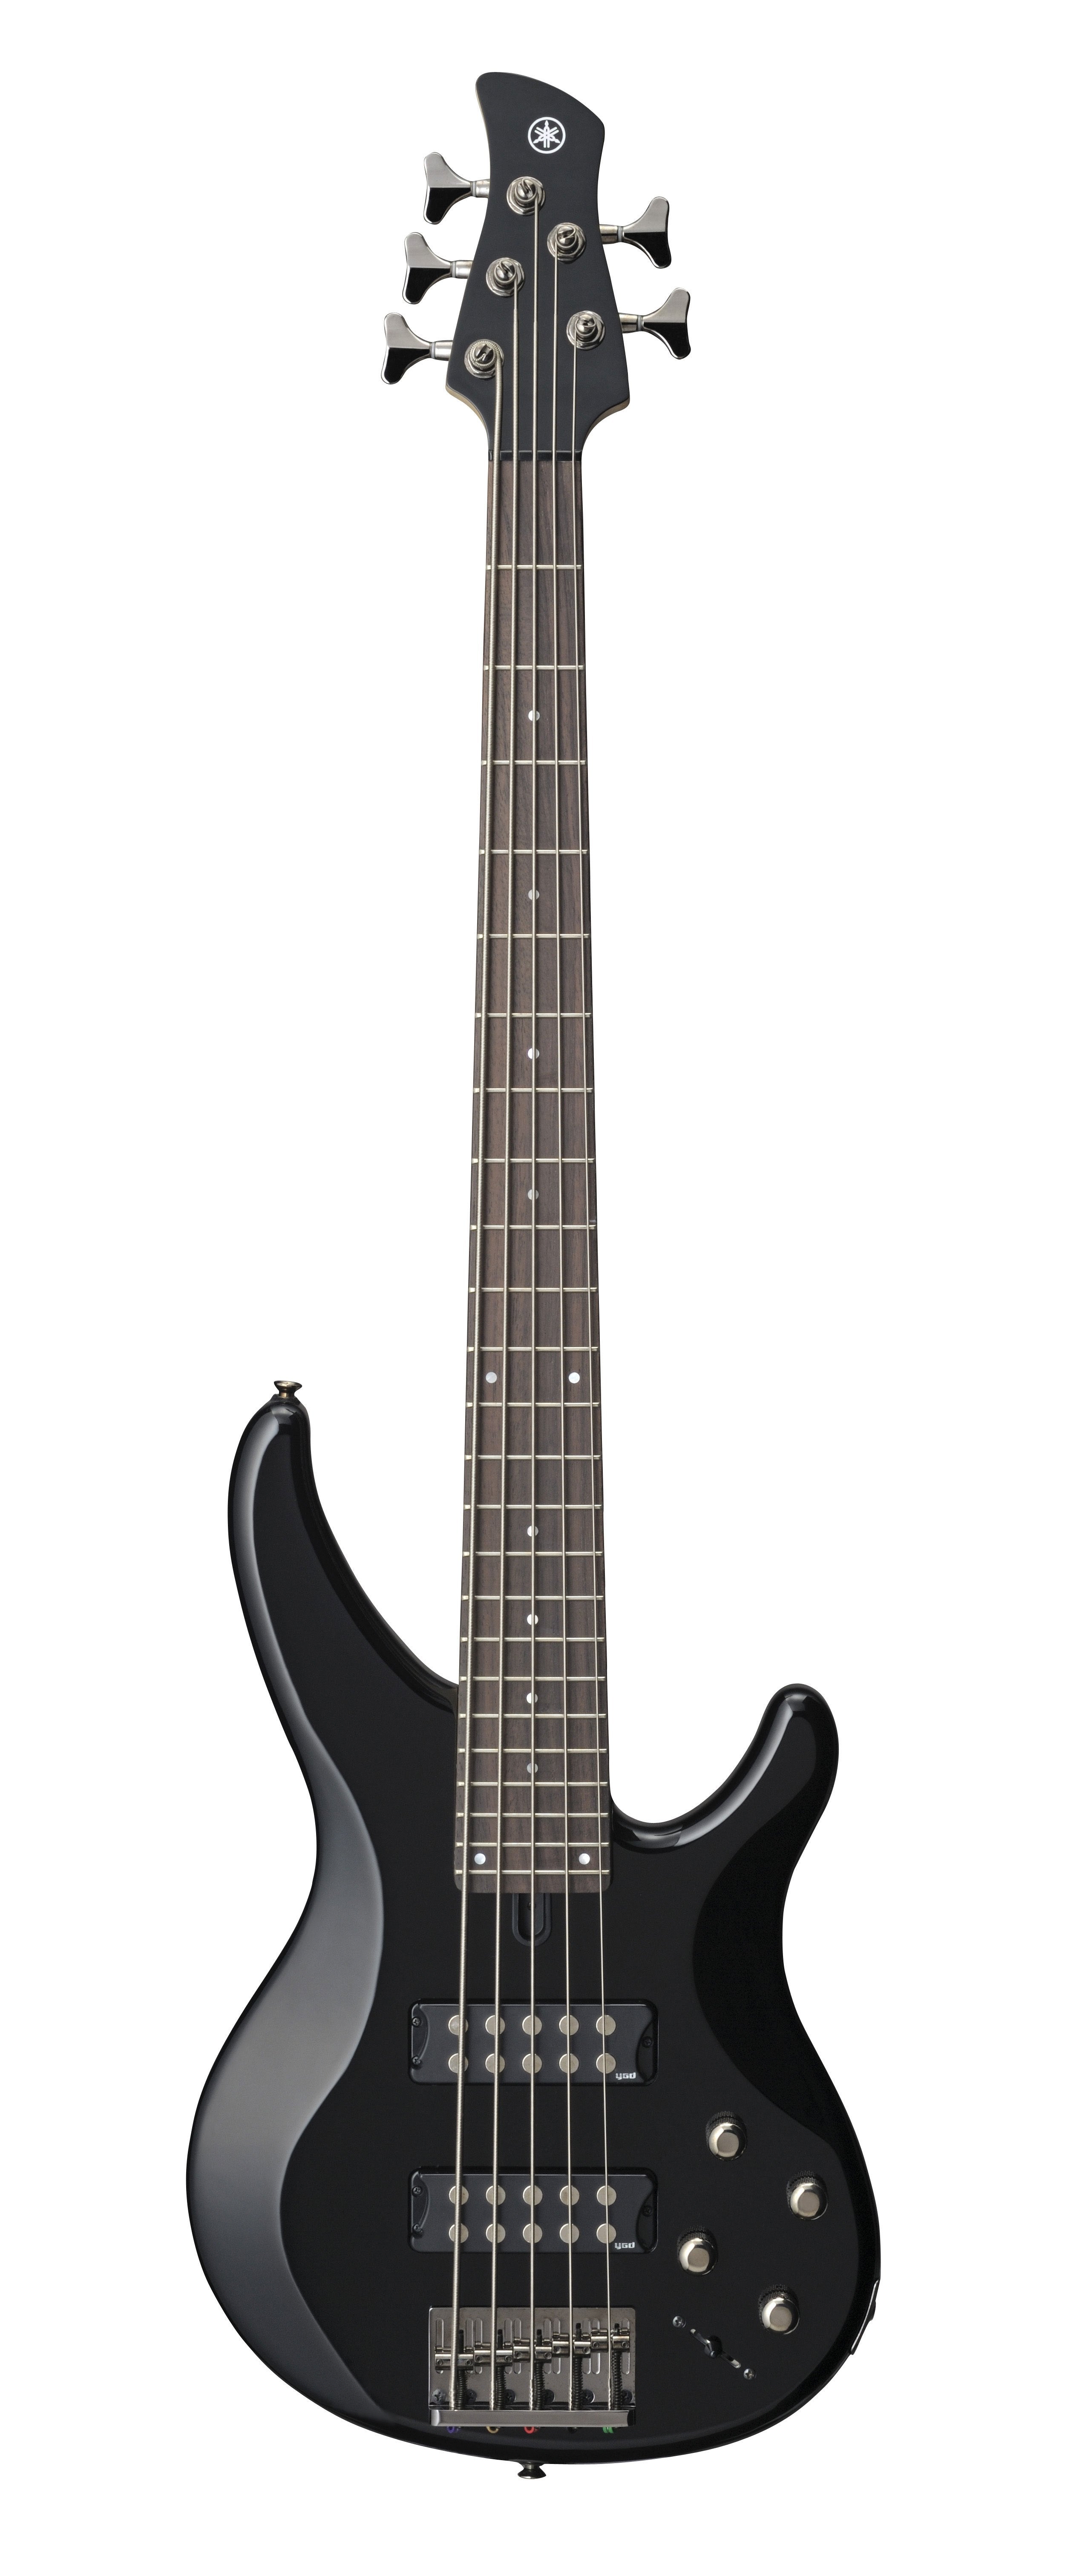 Yamaha TRBX305 Bass Guitar - Black